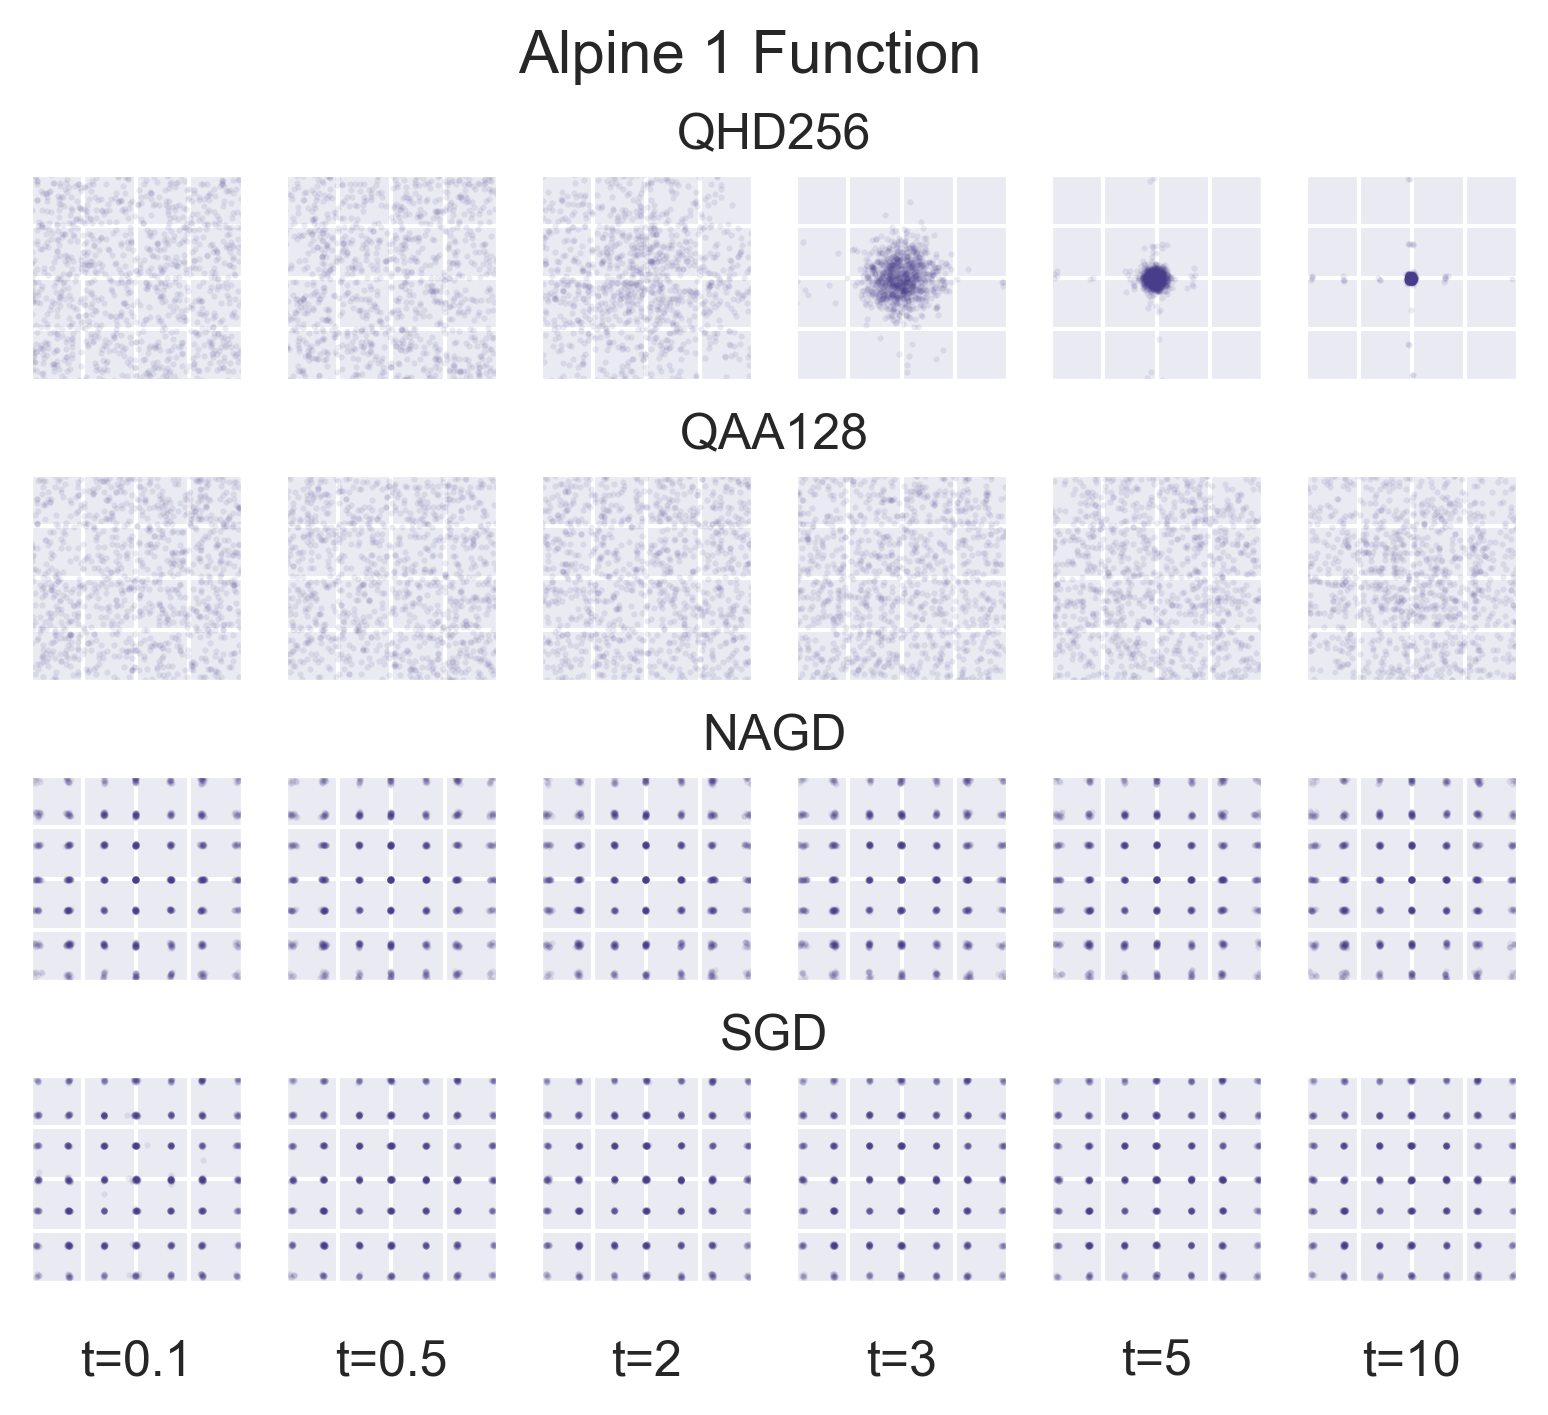 Comparison of optimization methods on alpine1